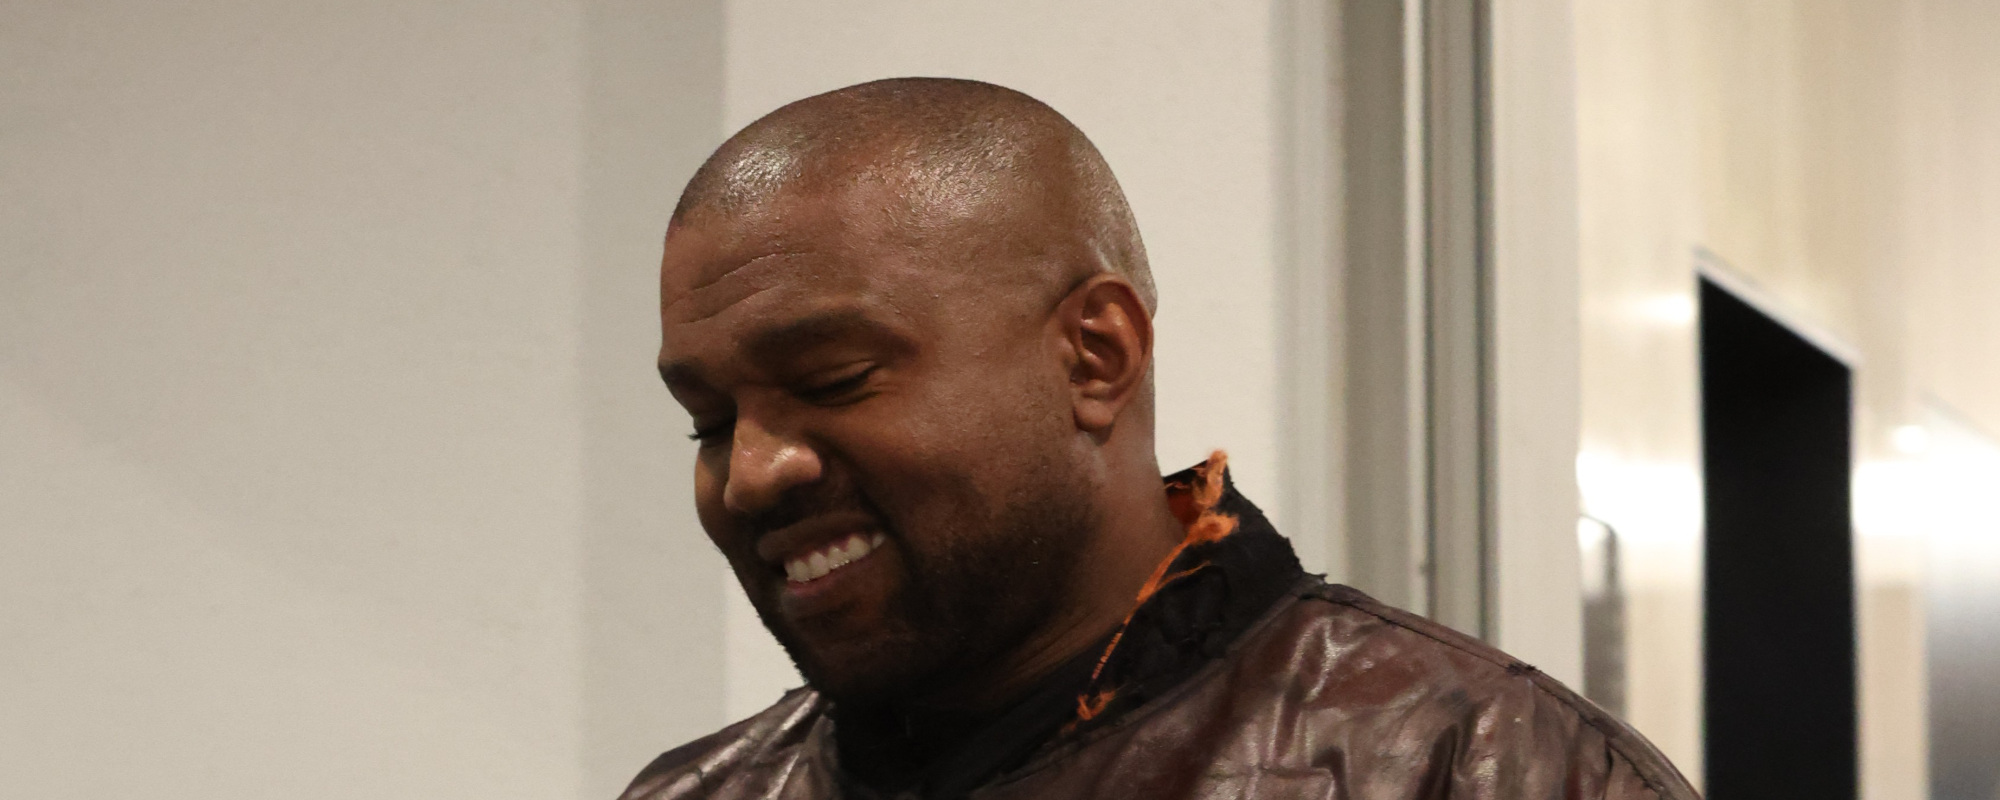 Fuites de l'album visuel "Donda" de Kanye West